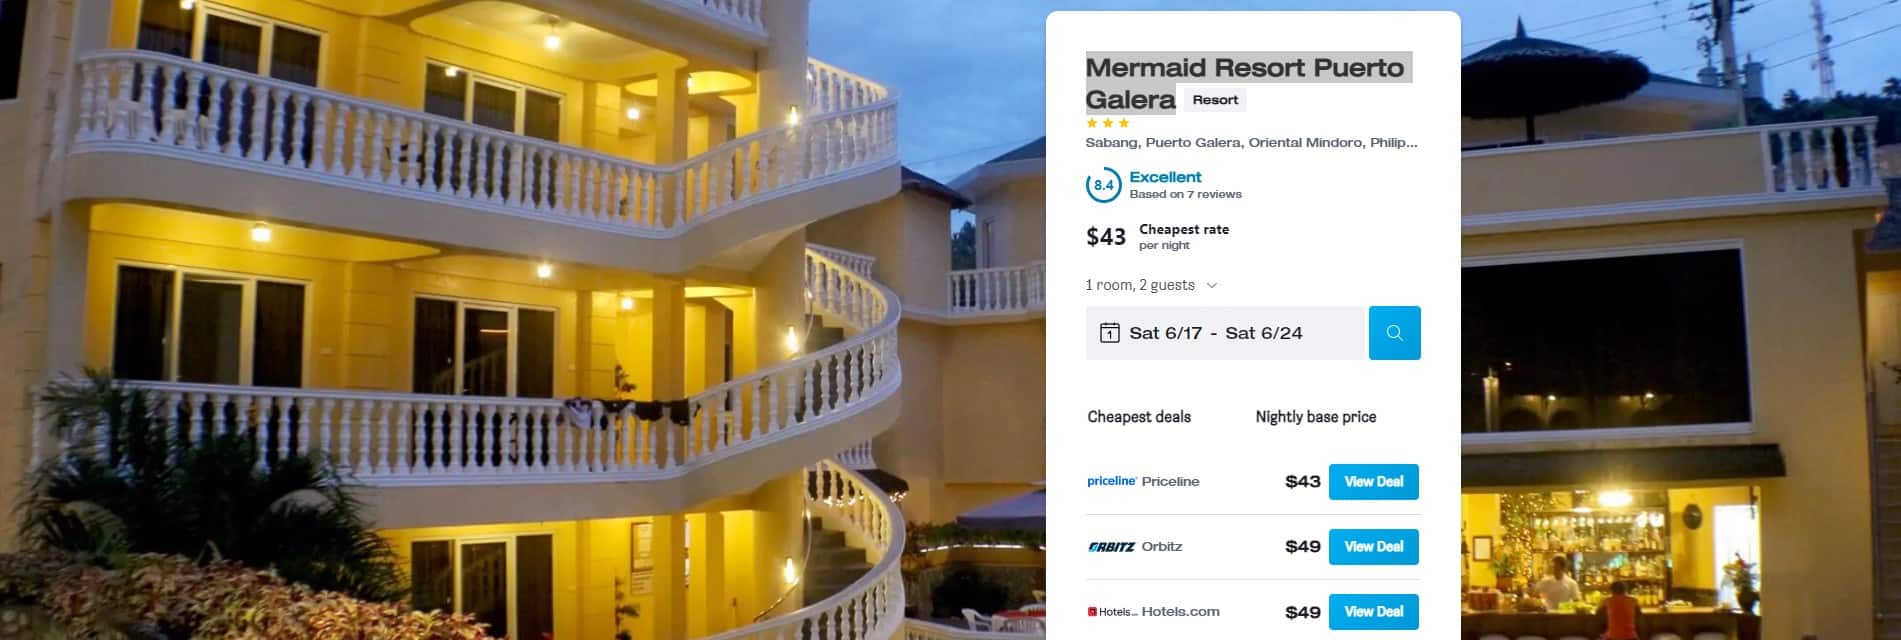 Mermaid Resort Puerto Galera